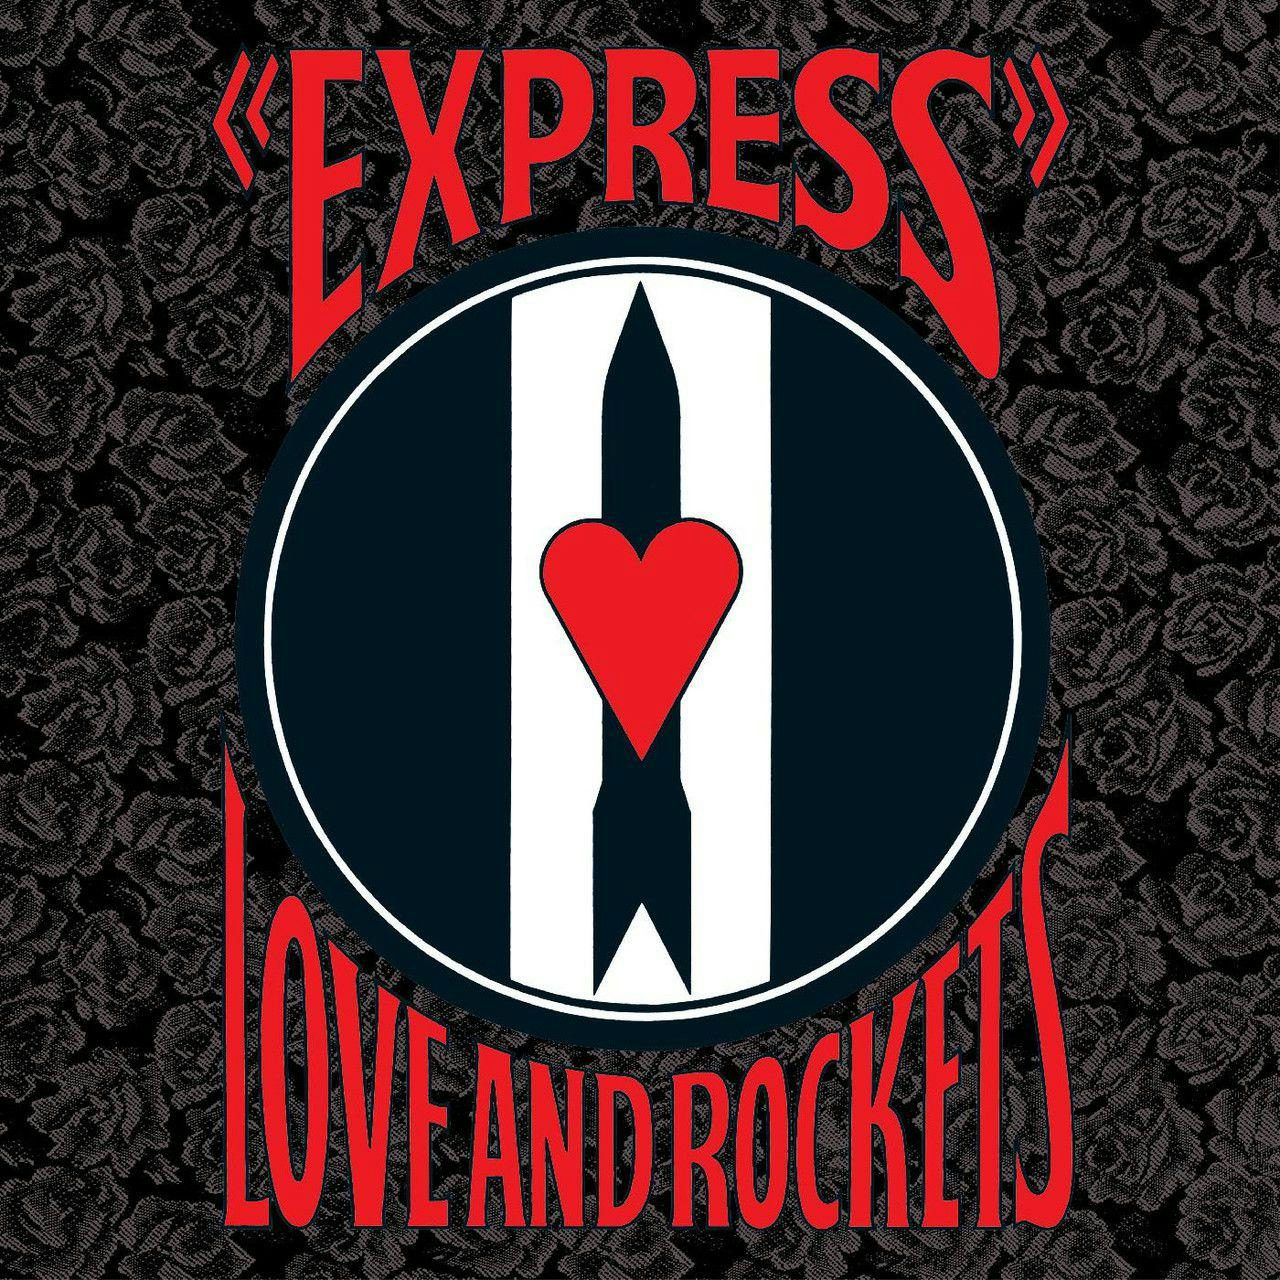 Express Vinyl Record - Love and Rockets